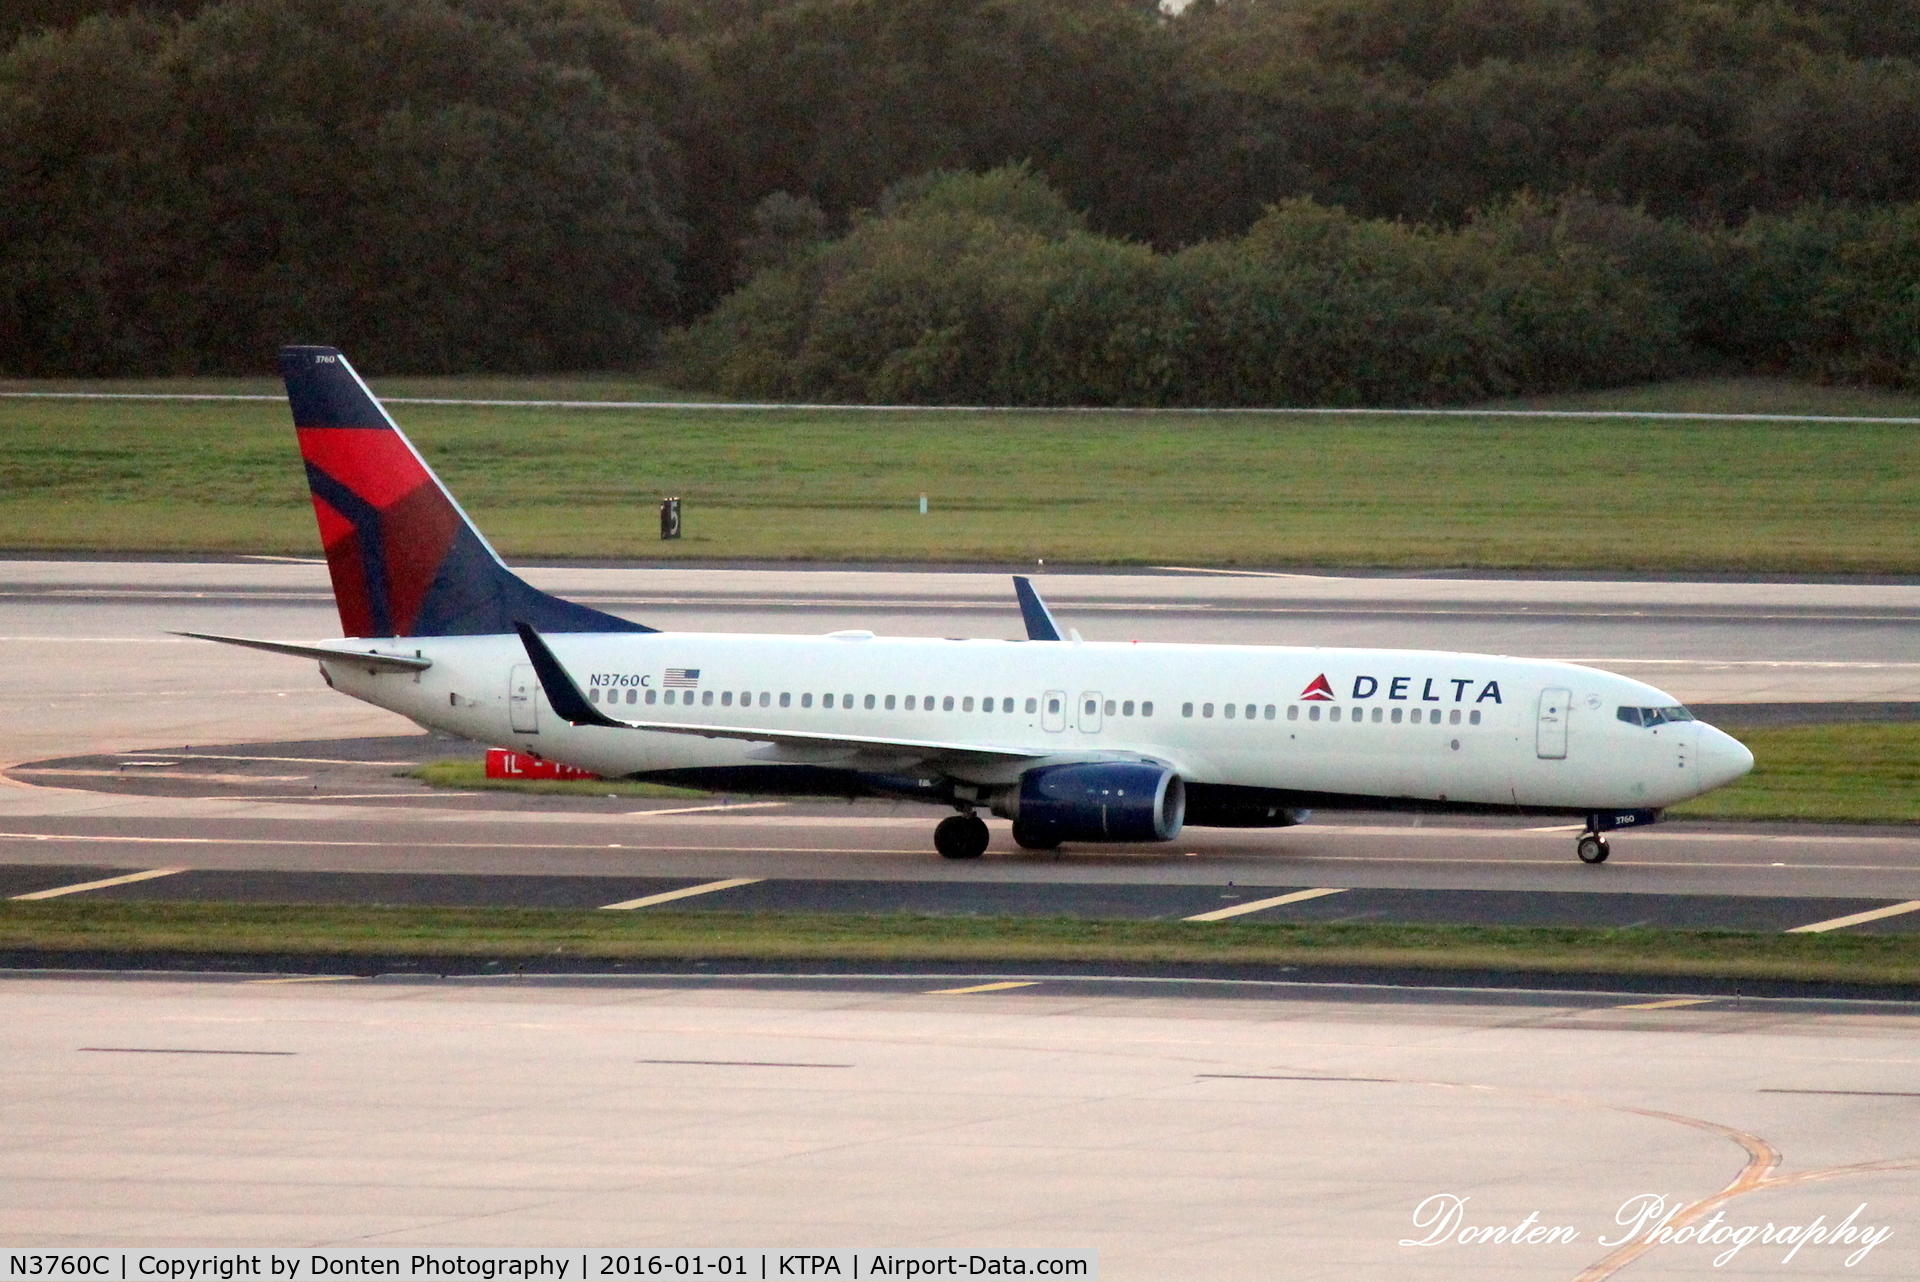 N3760C, 2001 Boeing 737-832 C/N 30816, Delta Flight 1558 (N3760C) arrives at Tampa International Airport following flight from Los Angeles International Airport